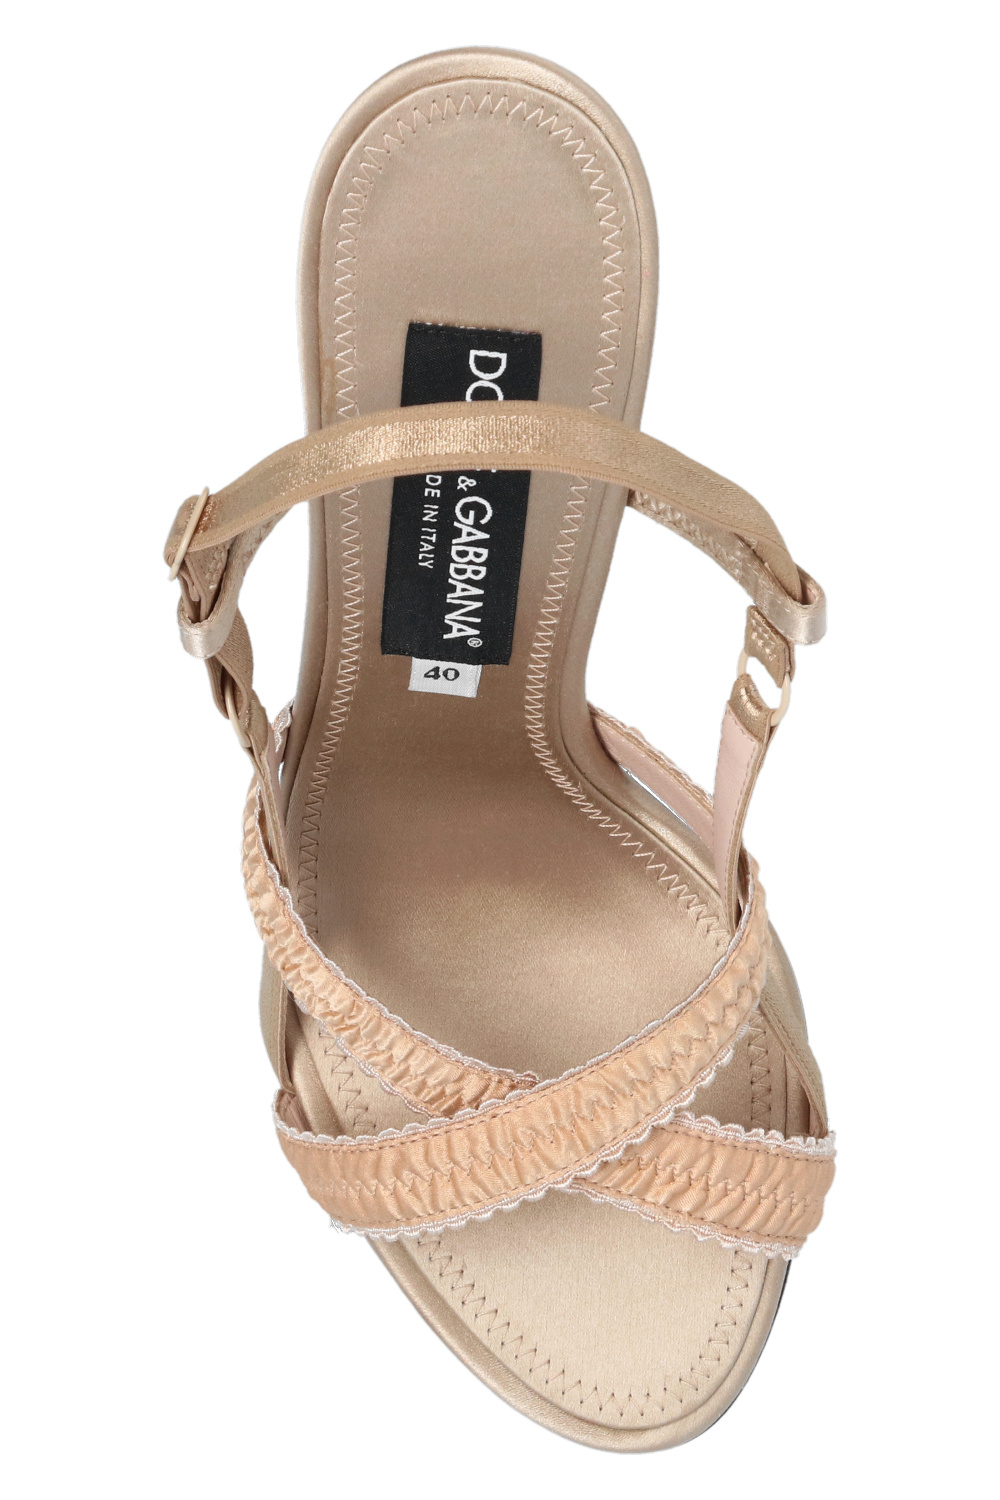 Dolce & Gabbana ruffled sleeve top ‘Keira’ heeled sandals